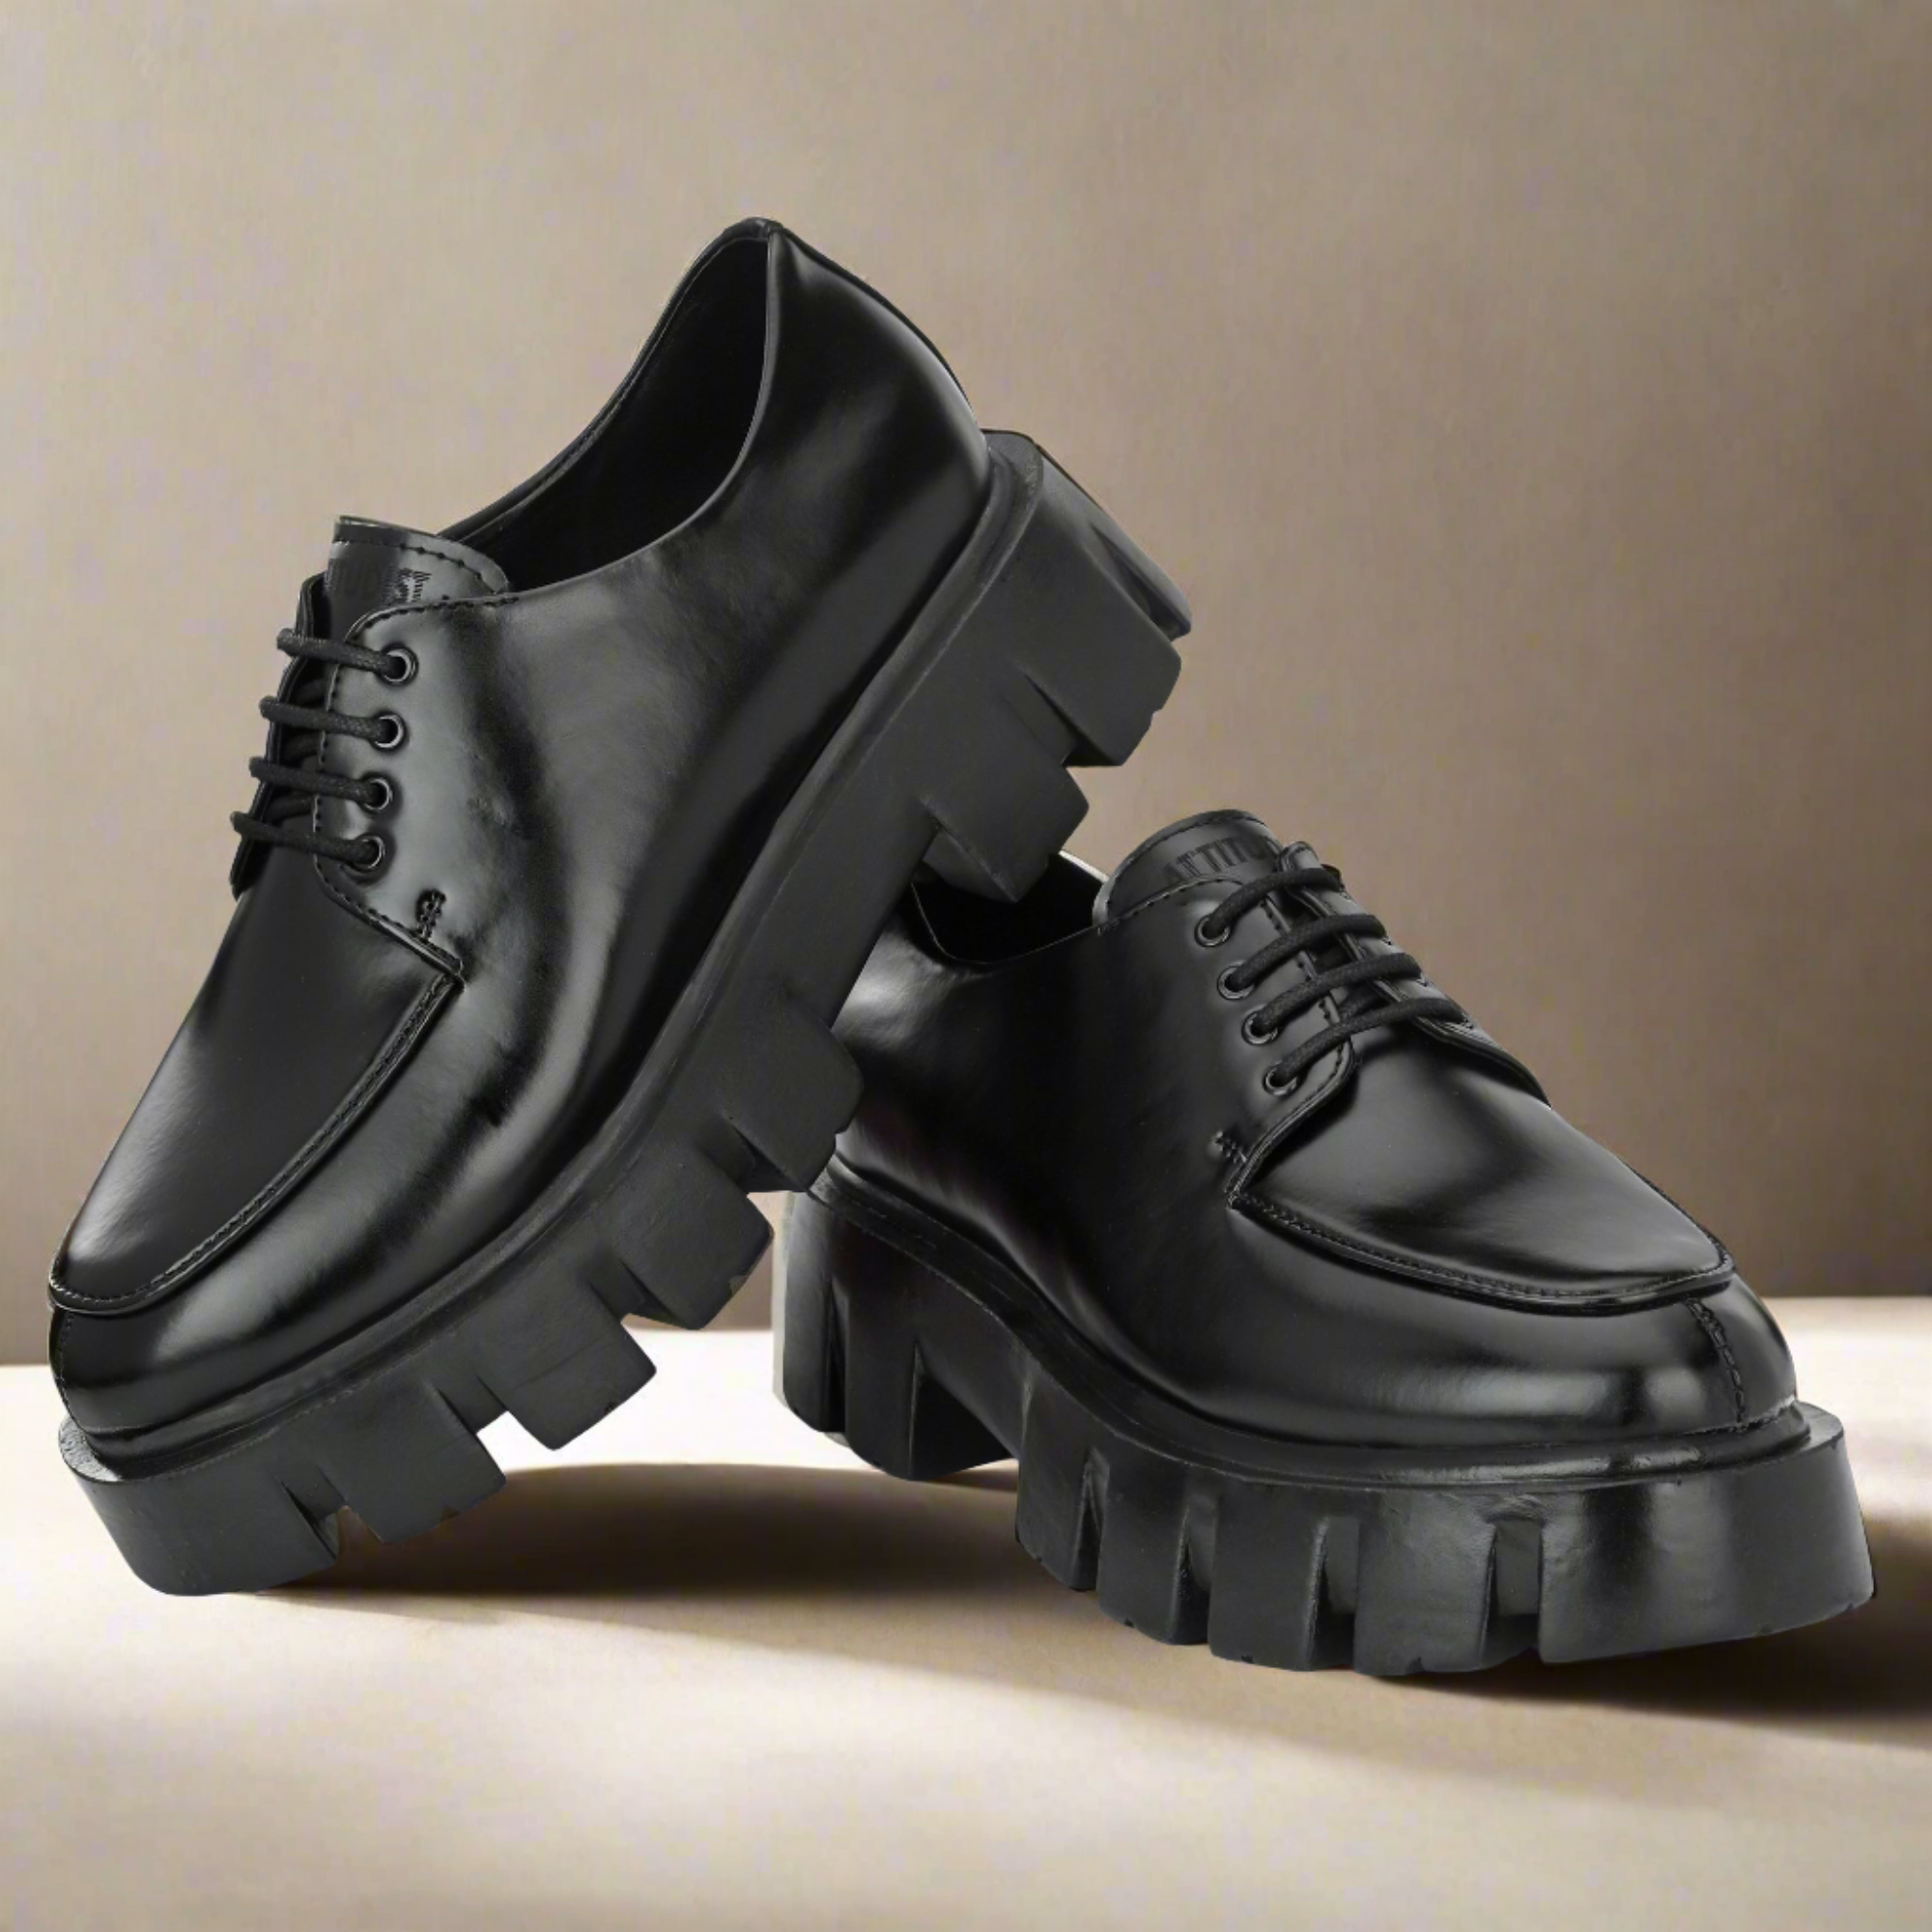 Attitudist Unisex Matte Black High Heel Formal Derby Shoes